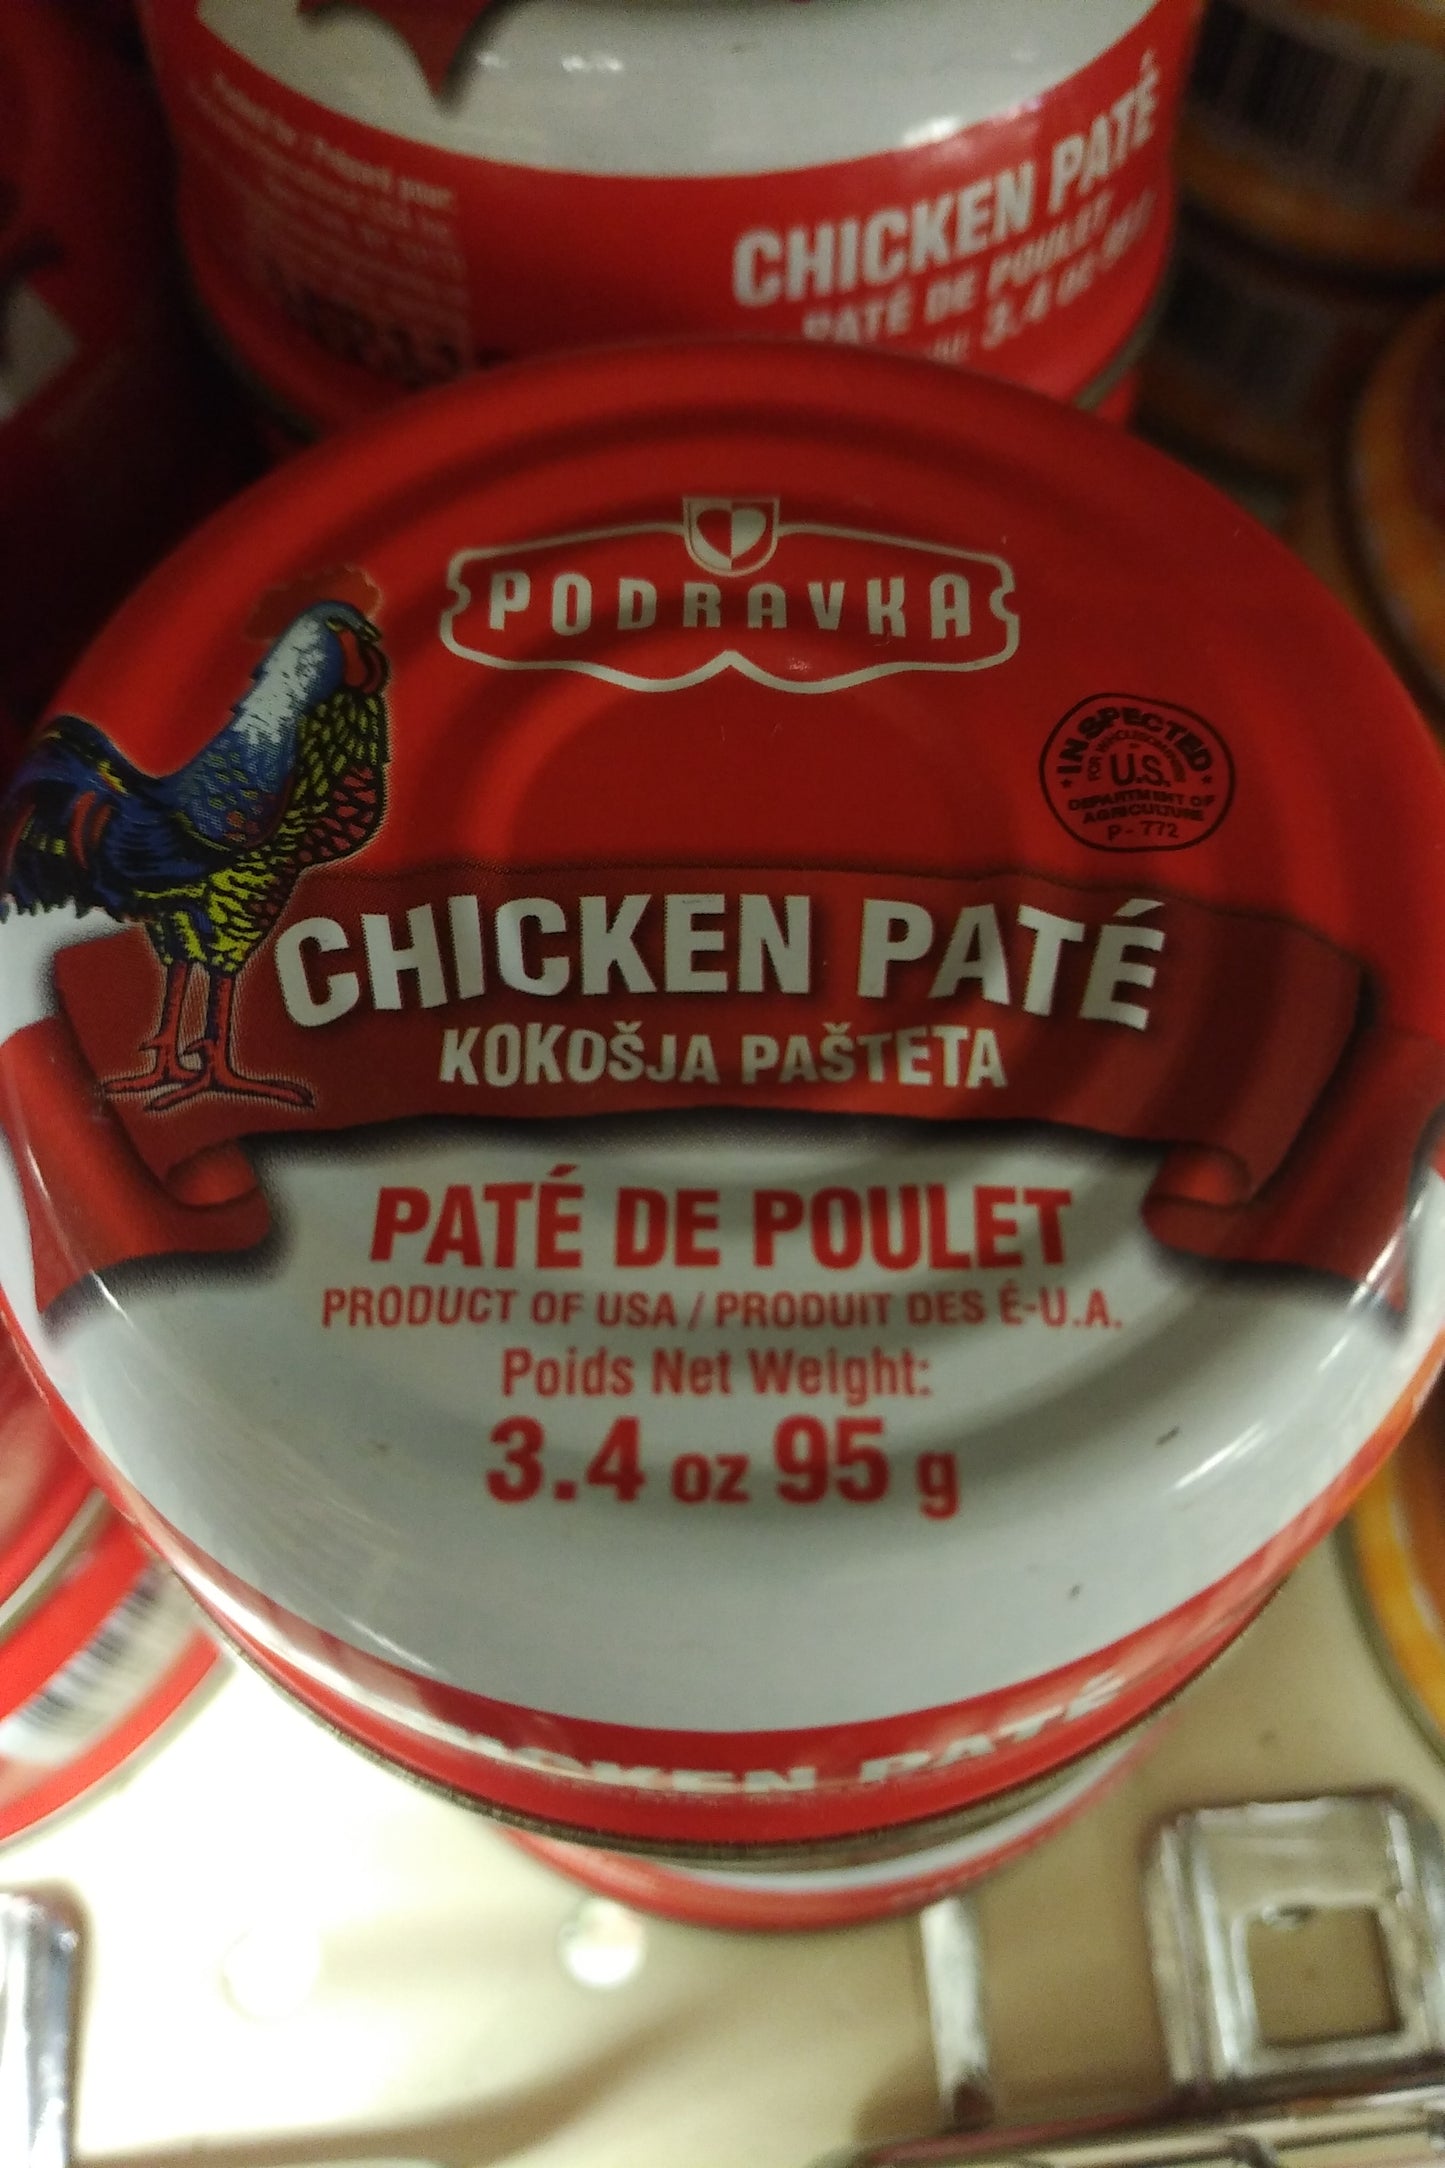 Podravka Chicken Pate de Pulet Spread 95gr